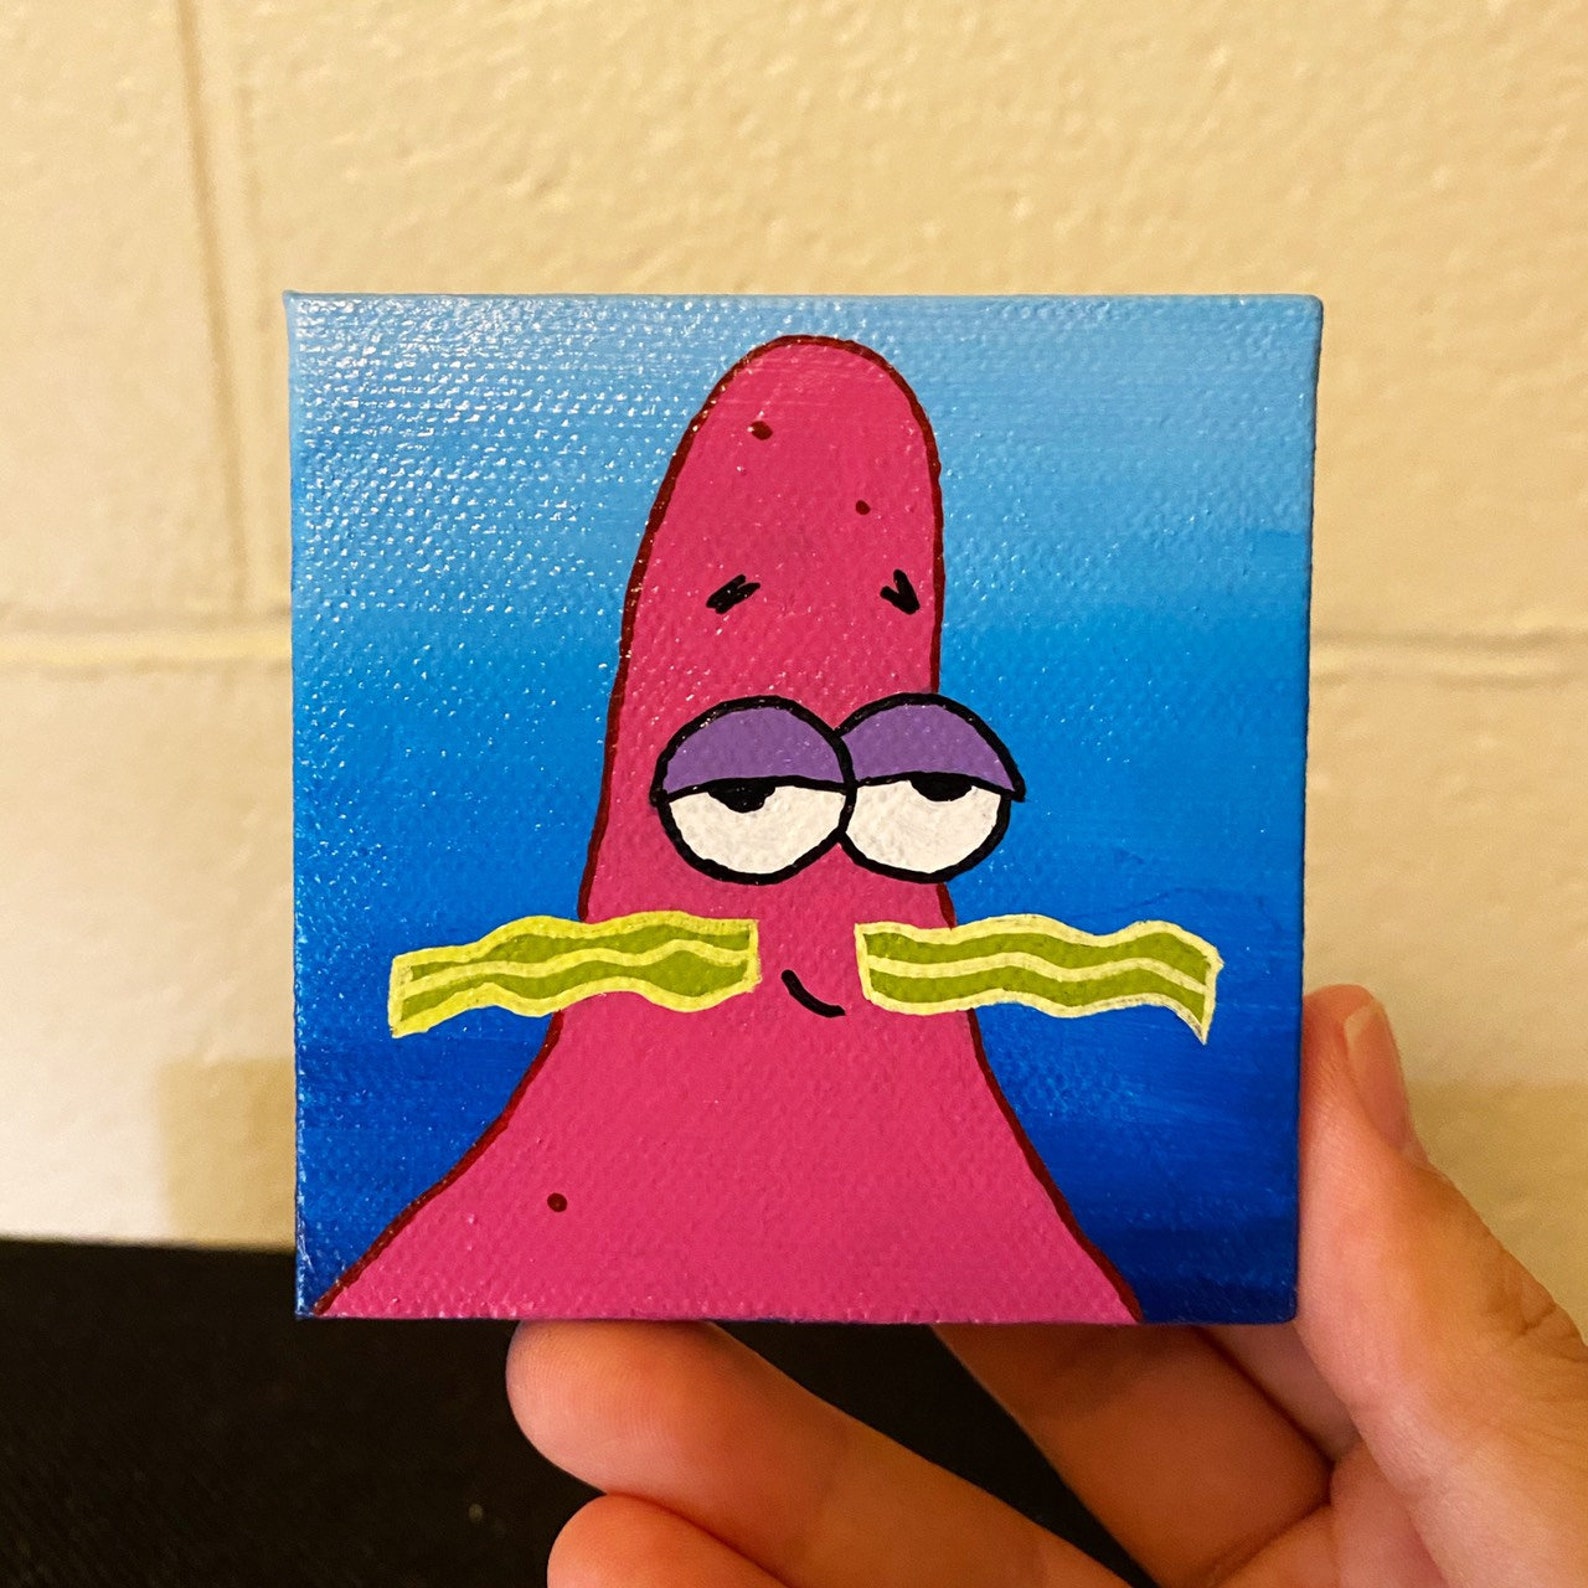 Patrick Star painting Spongebob Squarepants mini canvas | Etsy